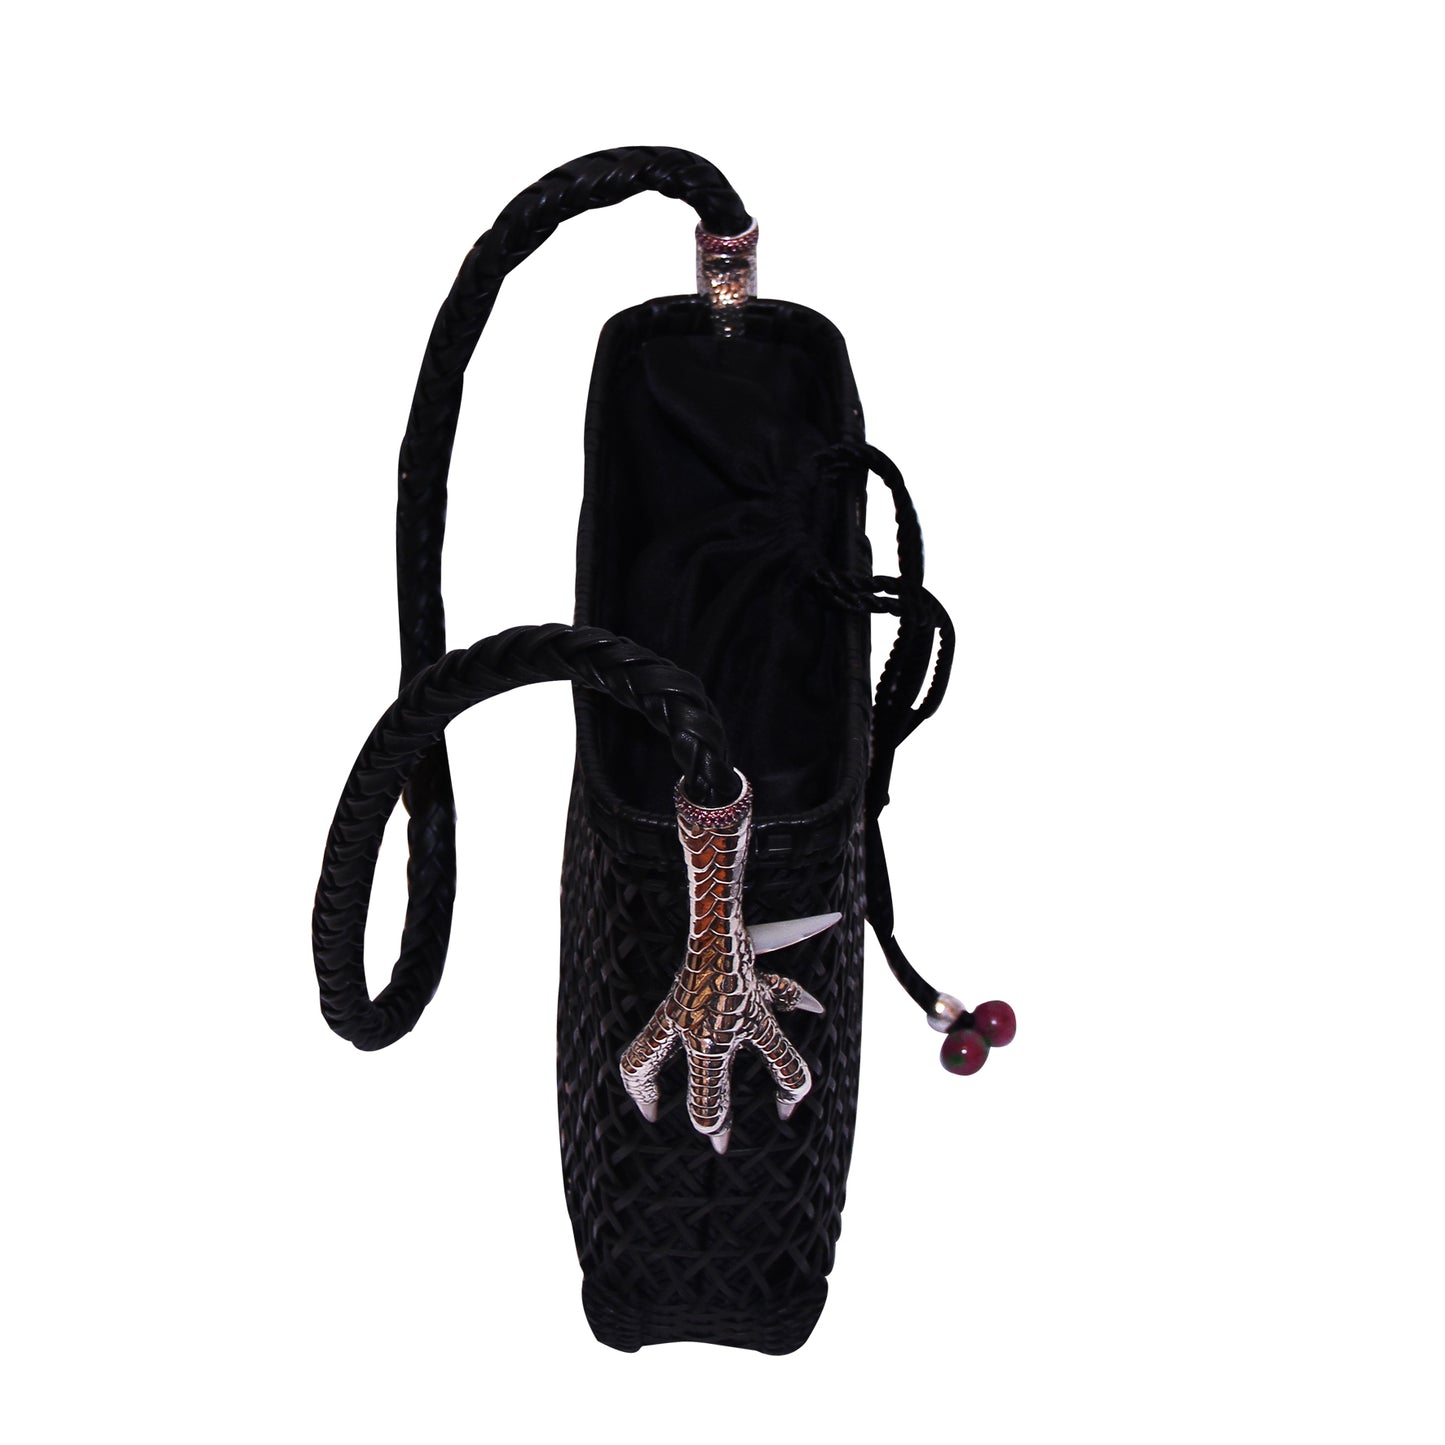 Rattan Handbag with Chicken Feet Design